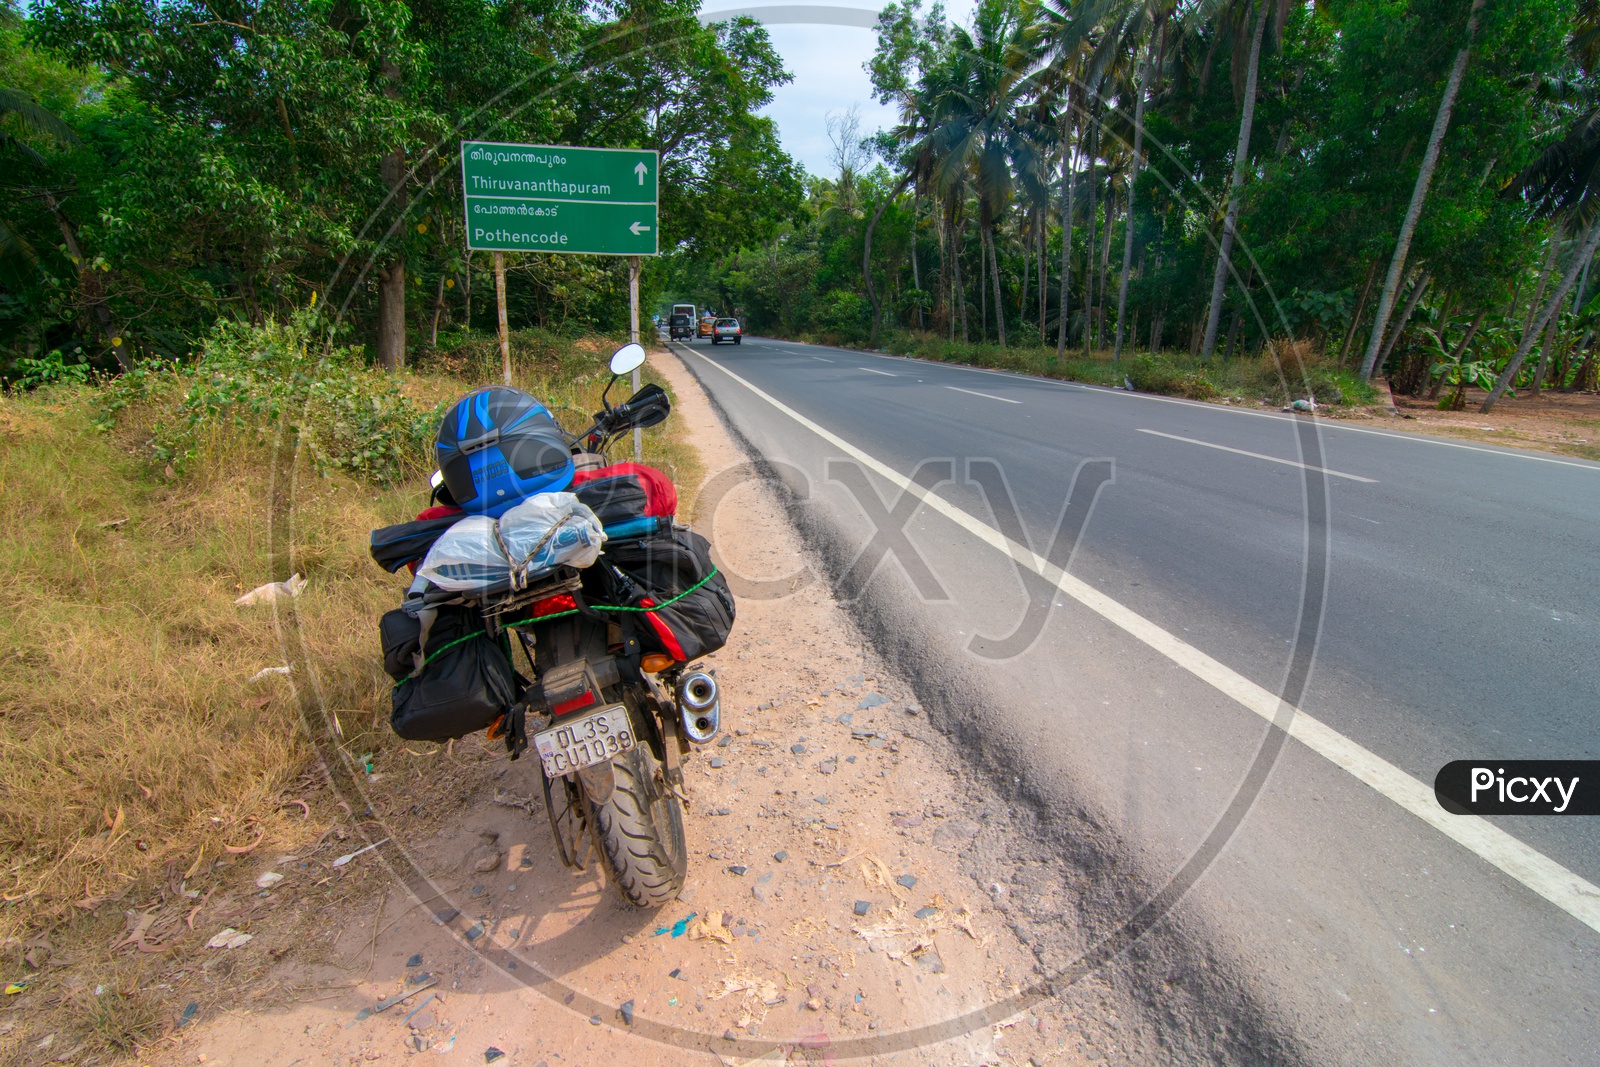 A Traveler's bike parked alongside the road at Tiruvananthapuram highway 